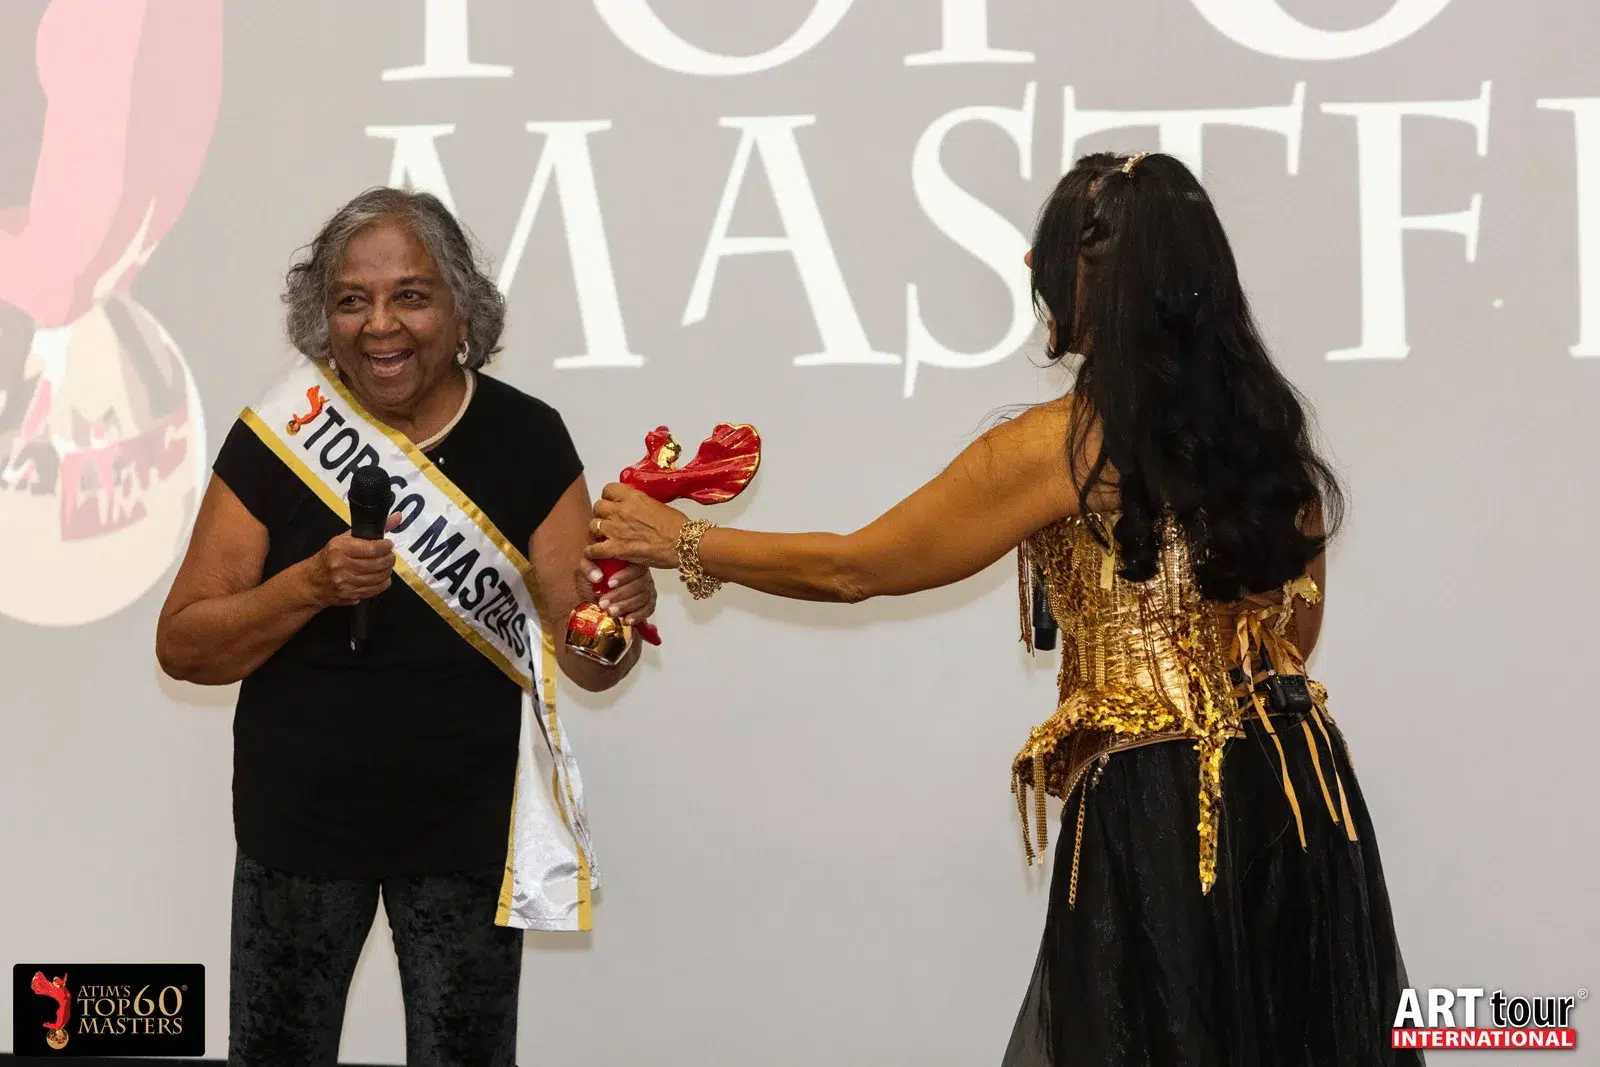 Neela Pushparaj Receiving Top 60 Masters Award 2023